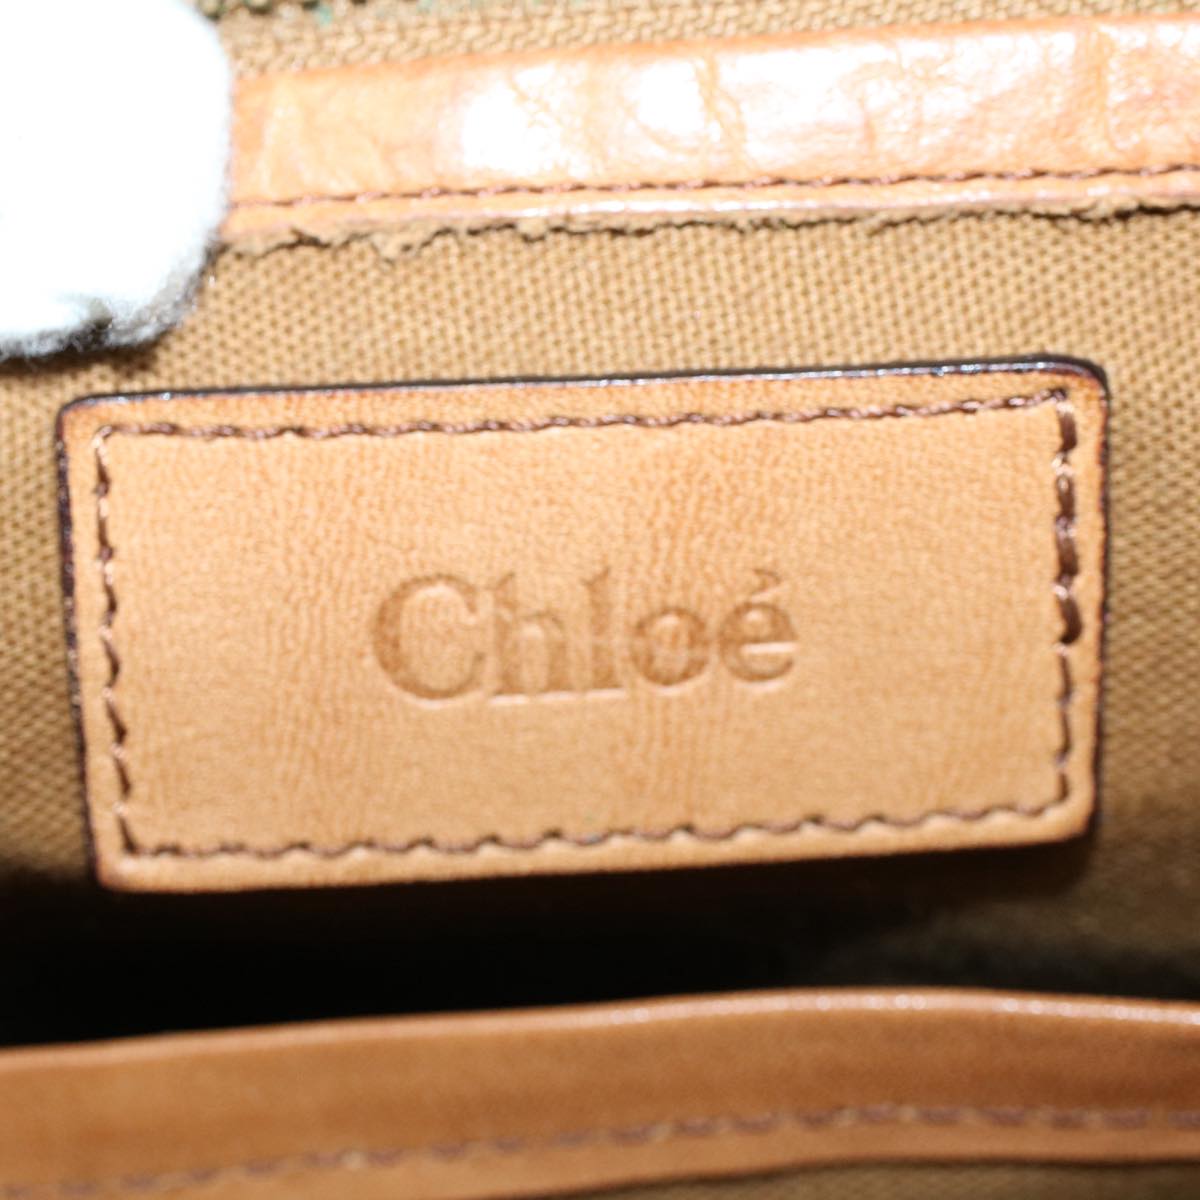 Chloe Shoulder Bag Leather Brown Auth bs8450